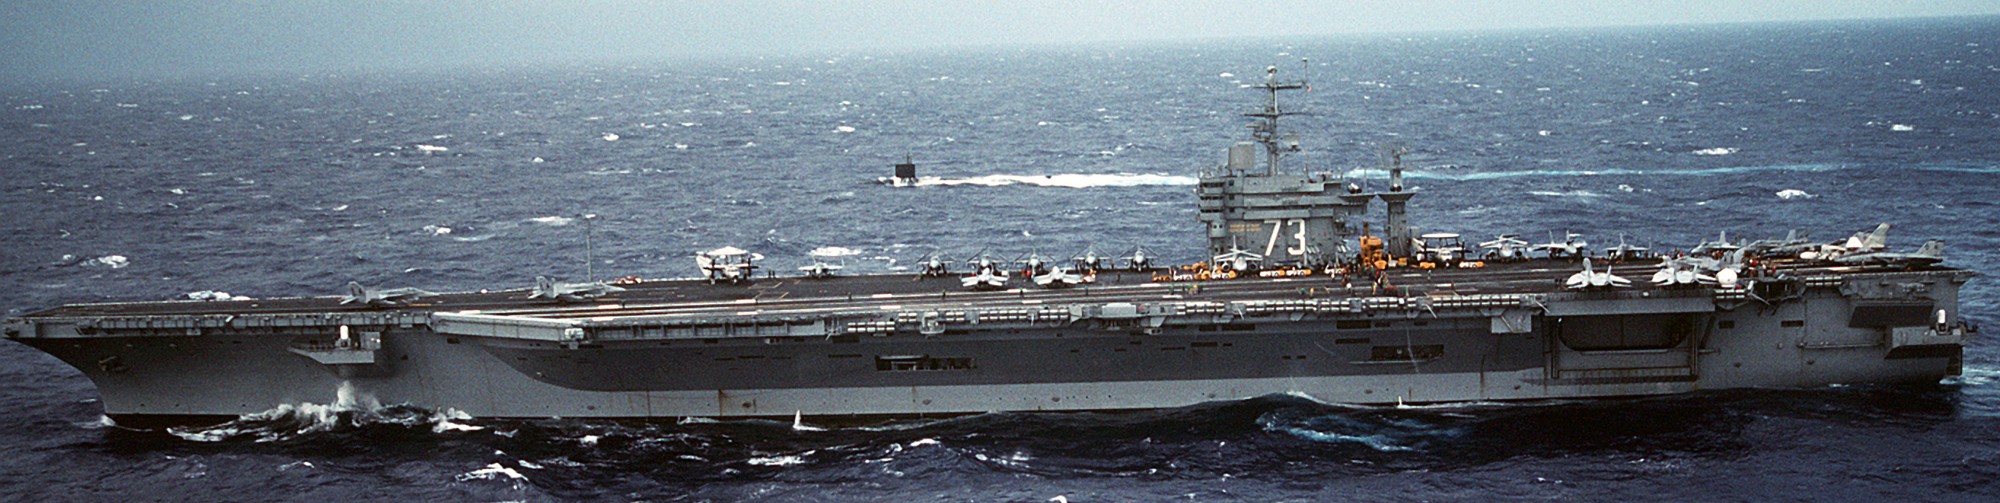 cvn-73 uss george washington nimitz class aircraft carrier us navy shakedown cruise 64